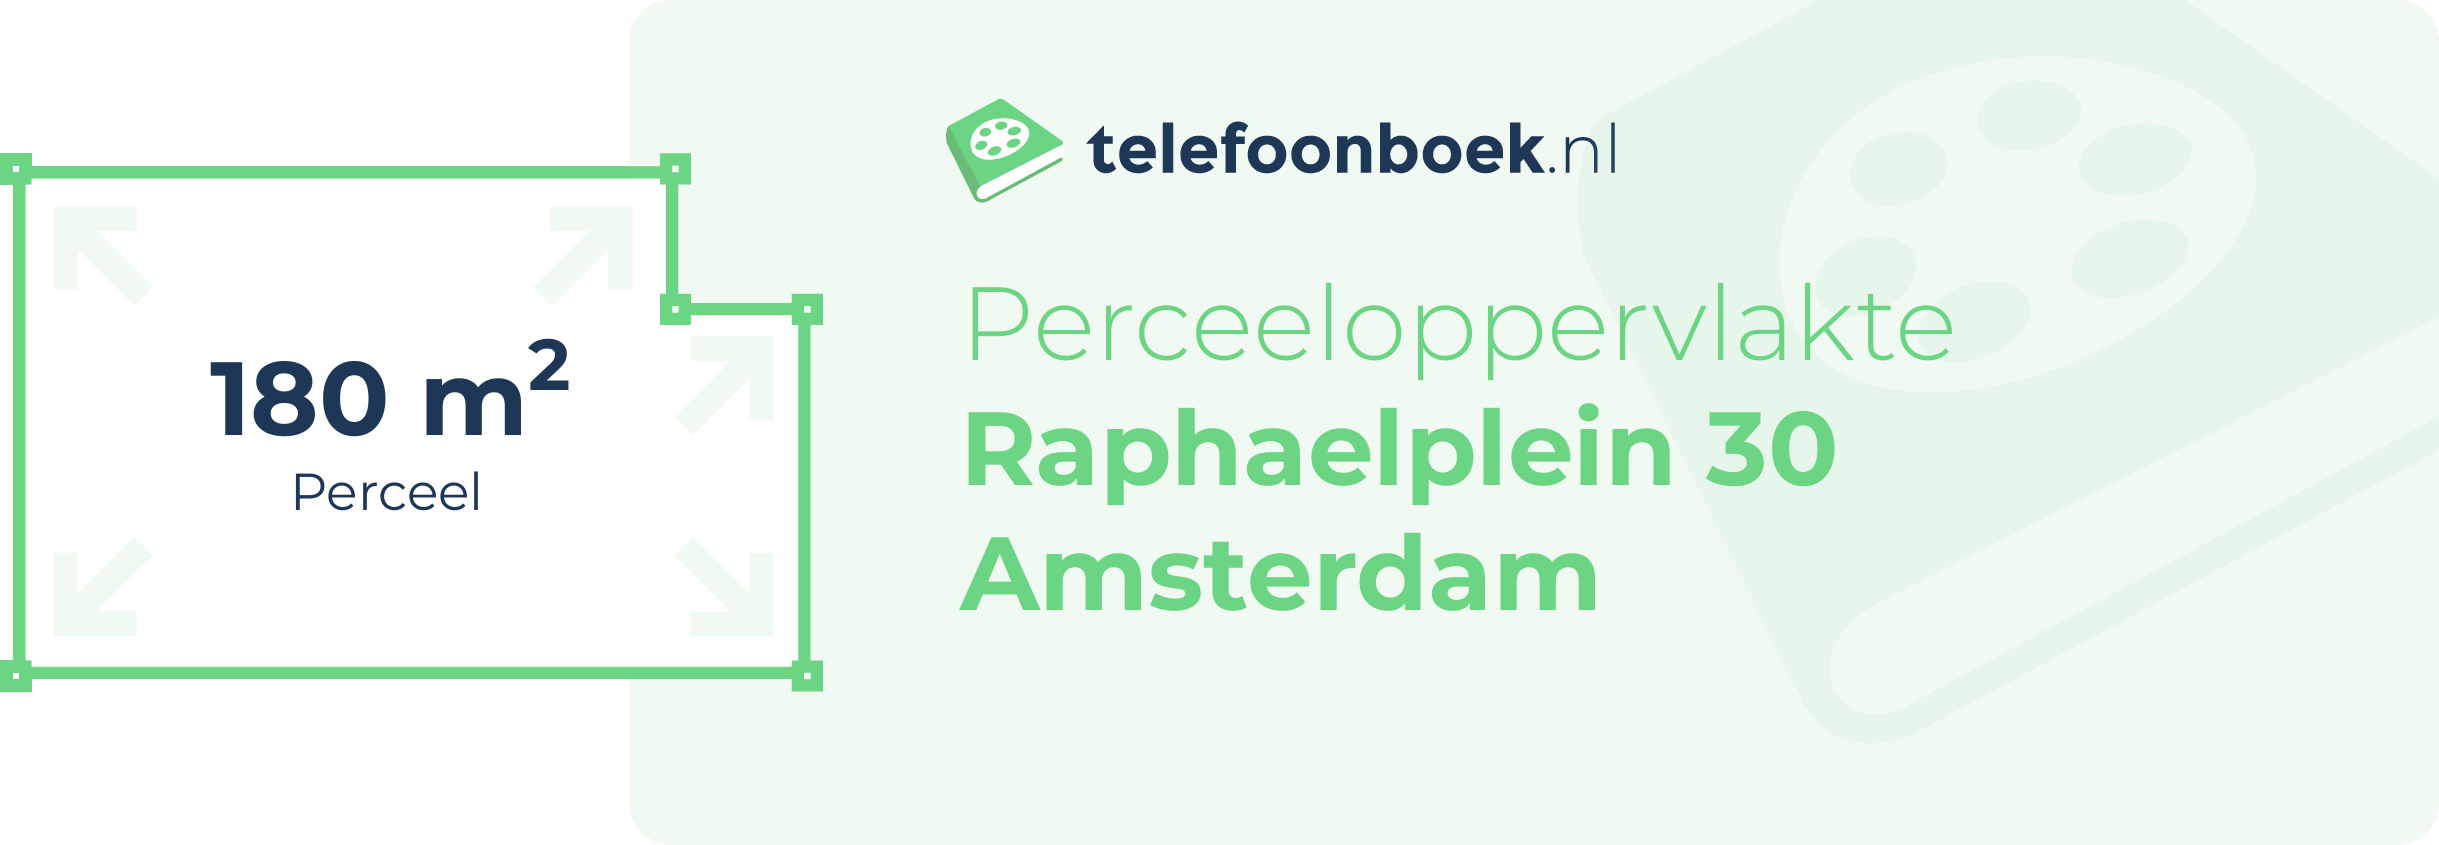 Perceeloppervlakte Raphaelplein 30 Amsterdam